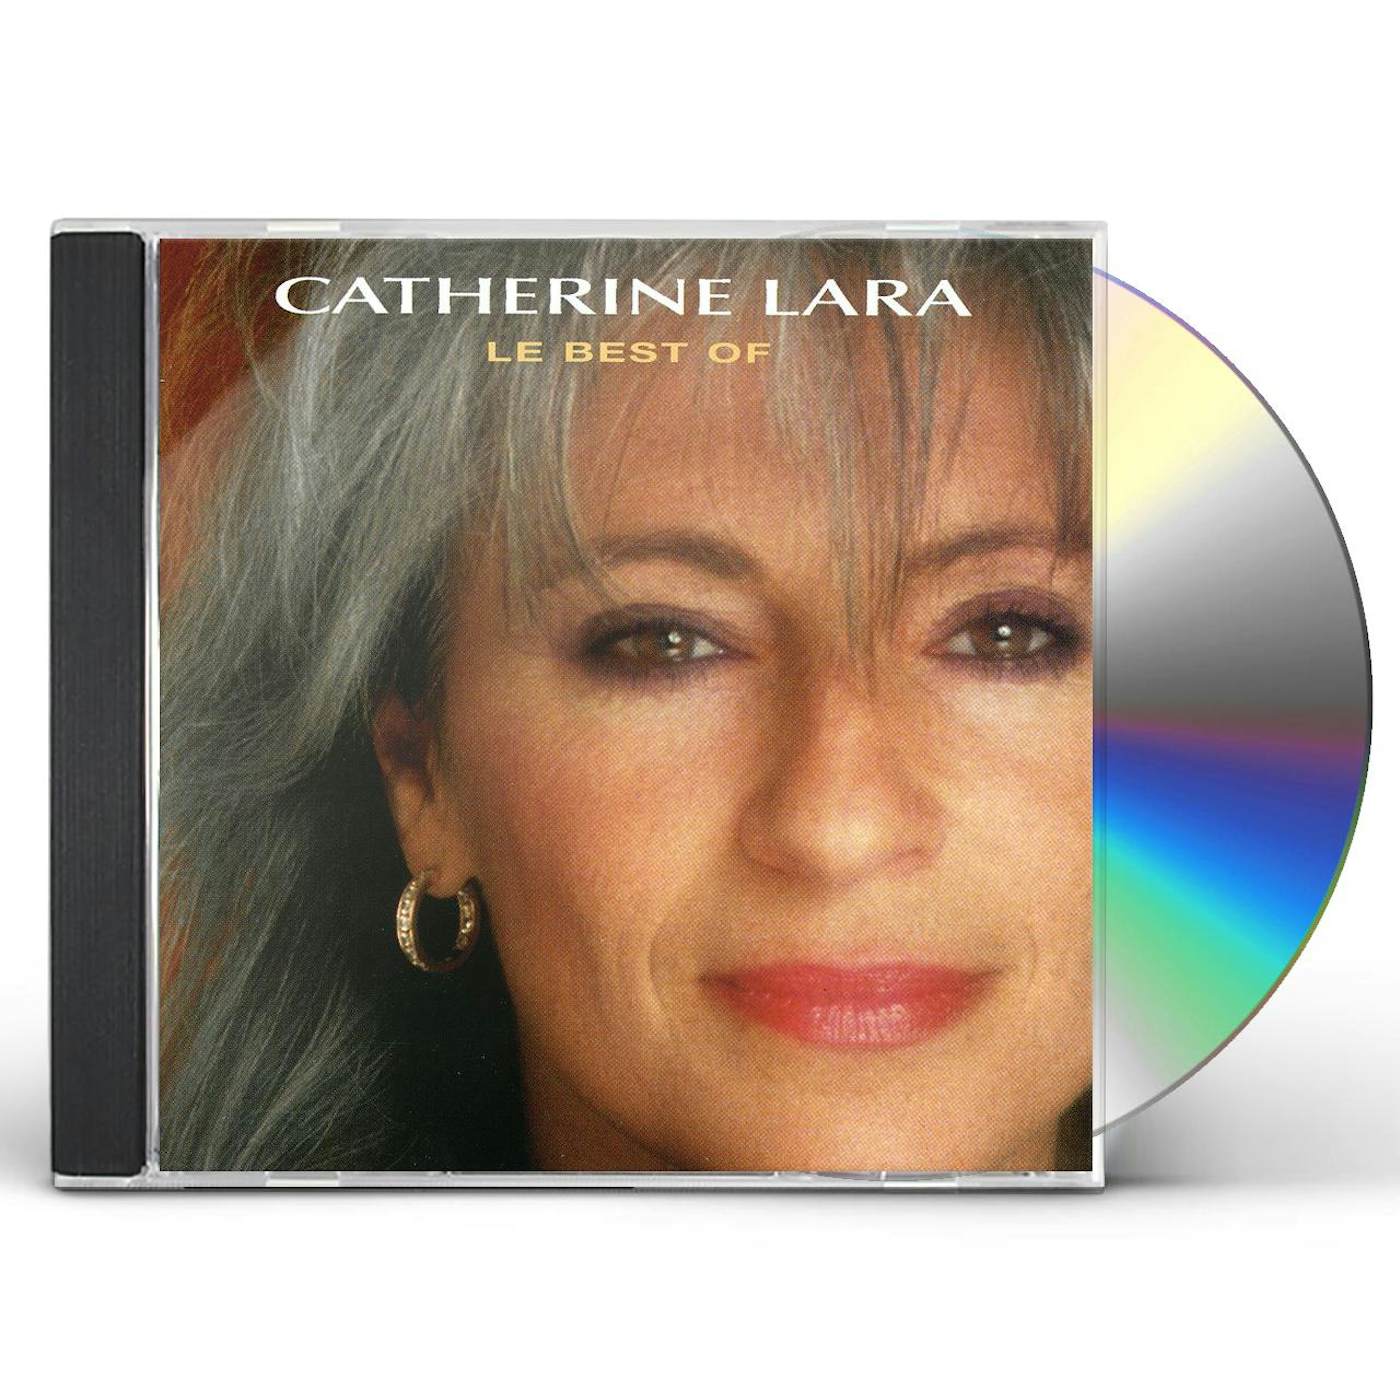 Catherine Lara BEST OF CD